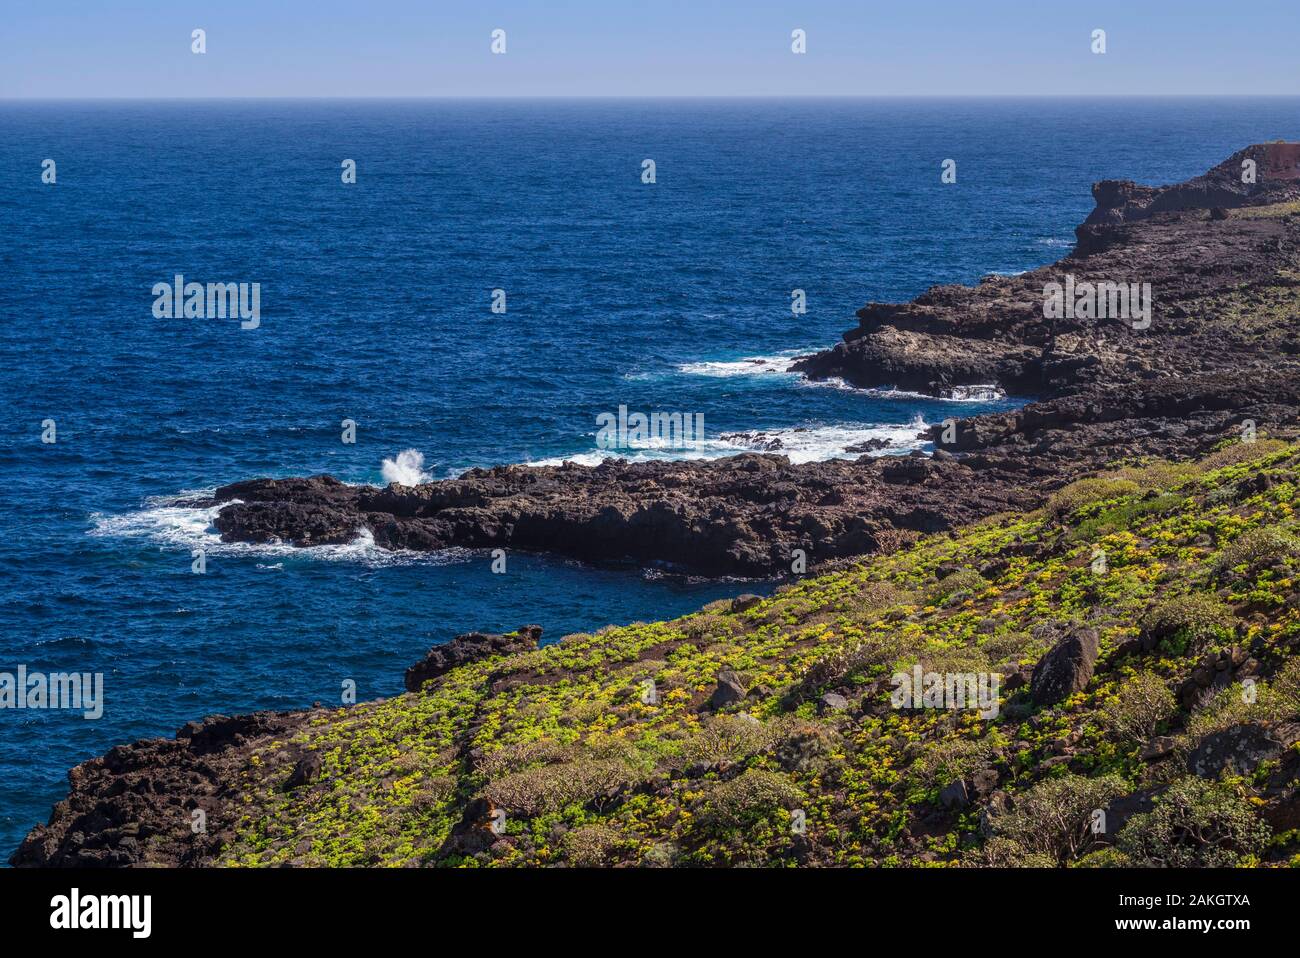 Spain, Canary Islands, El Hierro Island, Tamaduste, coastline Stock Photo